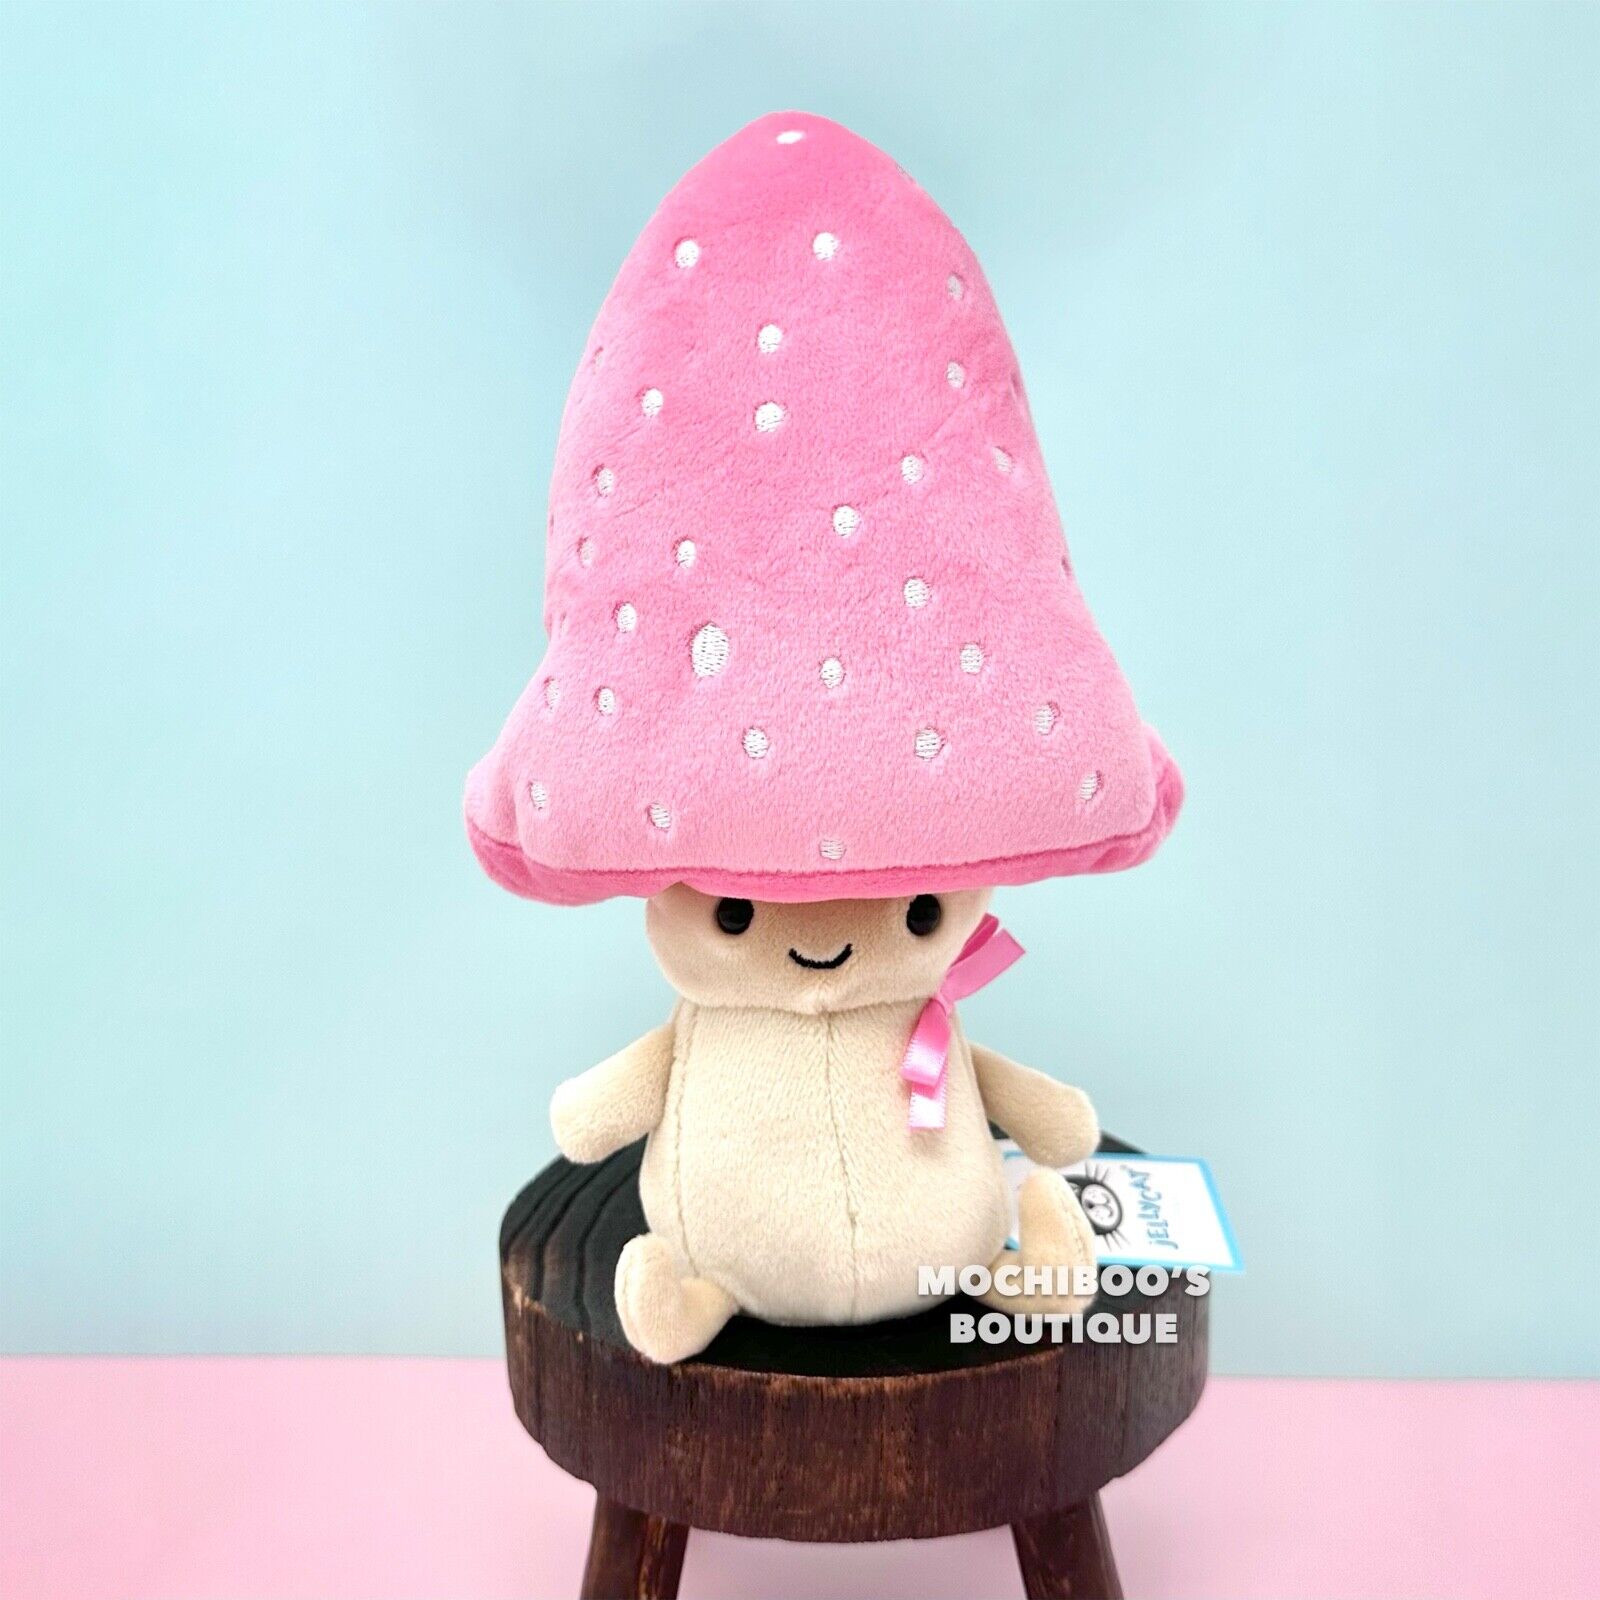 NWT Jellycat FUN-GUY PATTIE Soft Plush Toy CUTE Mushroom Stuffed Shroom FUNGI